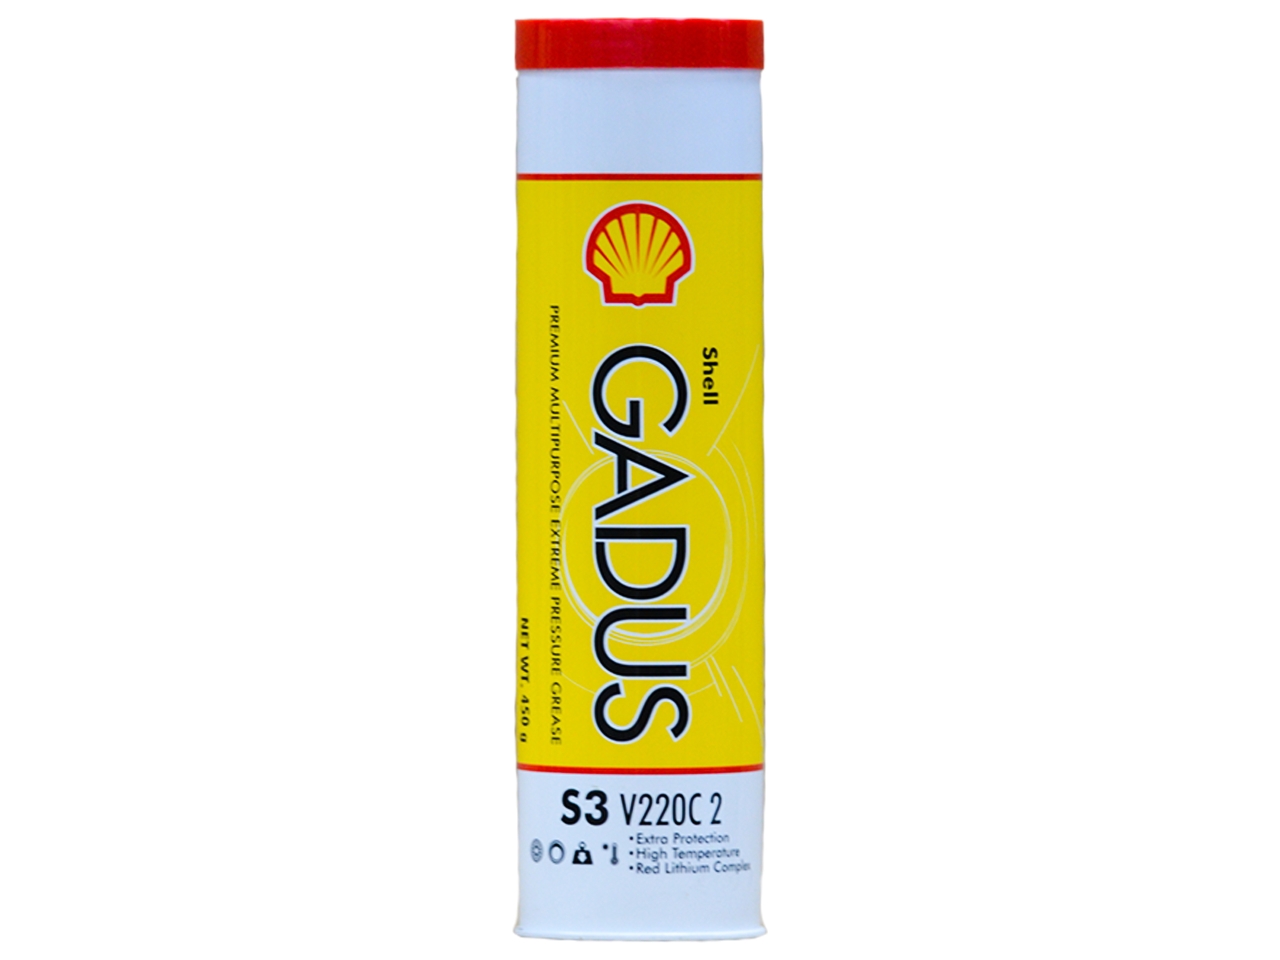 Shell Gadus S3 V220C 2 grease 0.45kg